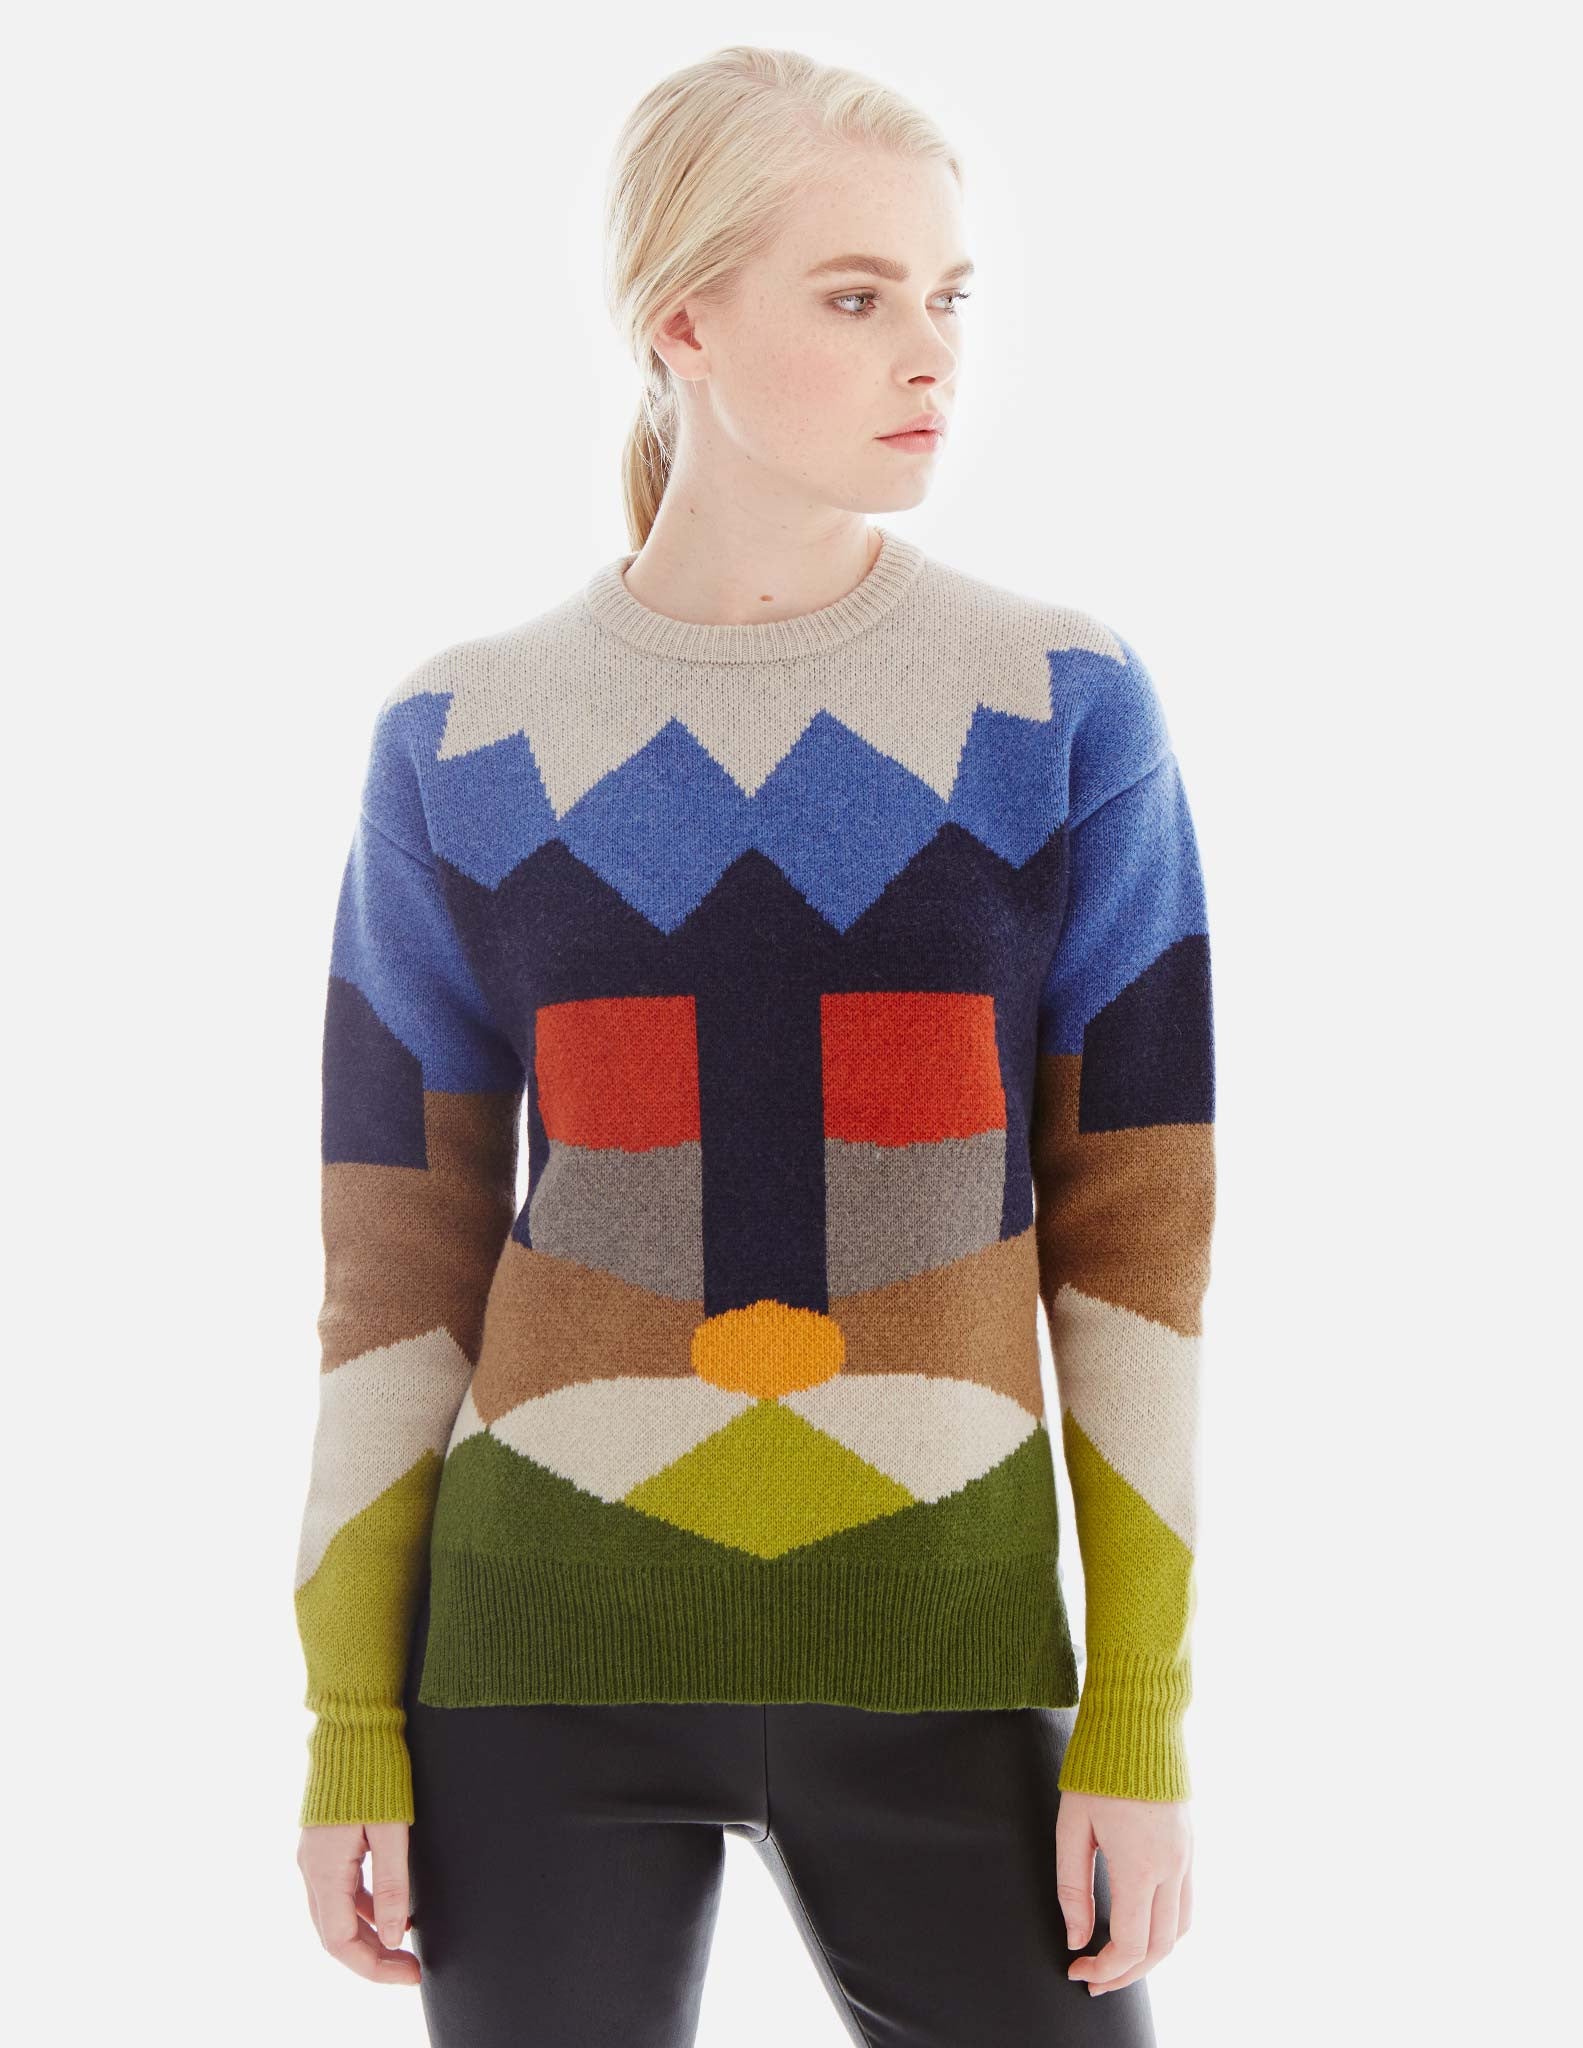 NOVIS | The Hendryk Sweater